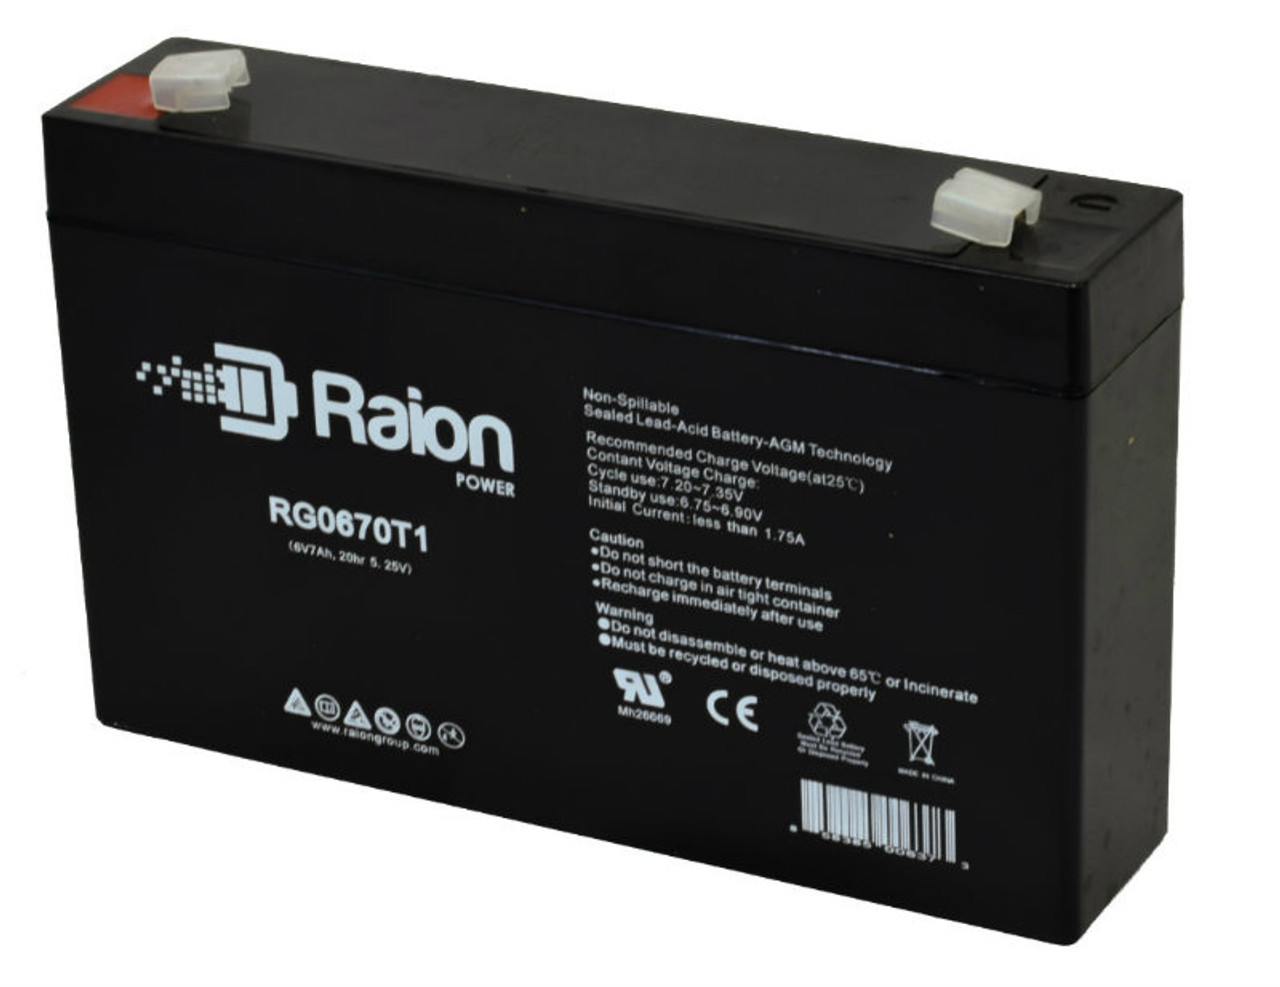 Raion Power RG0670T1 6V 7Ah Replacement Battery Cartridge for Pace Tech Inc. 911 STC MINIPACK ECG MONITOR Medical Equipment